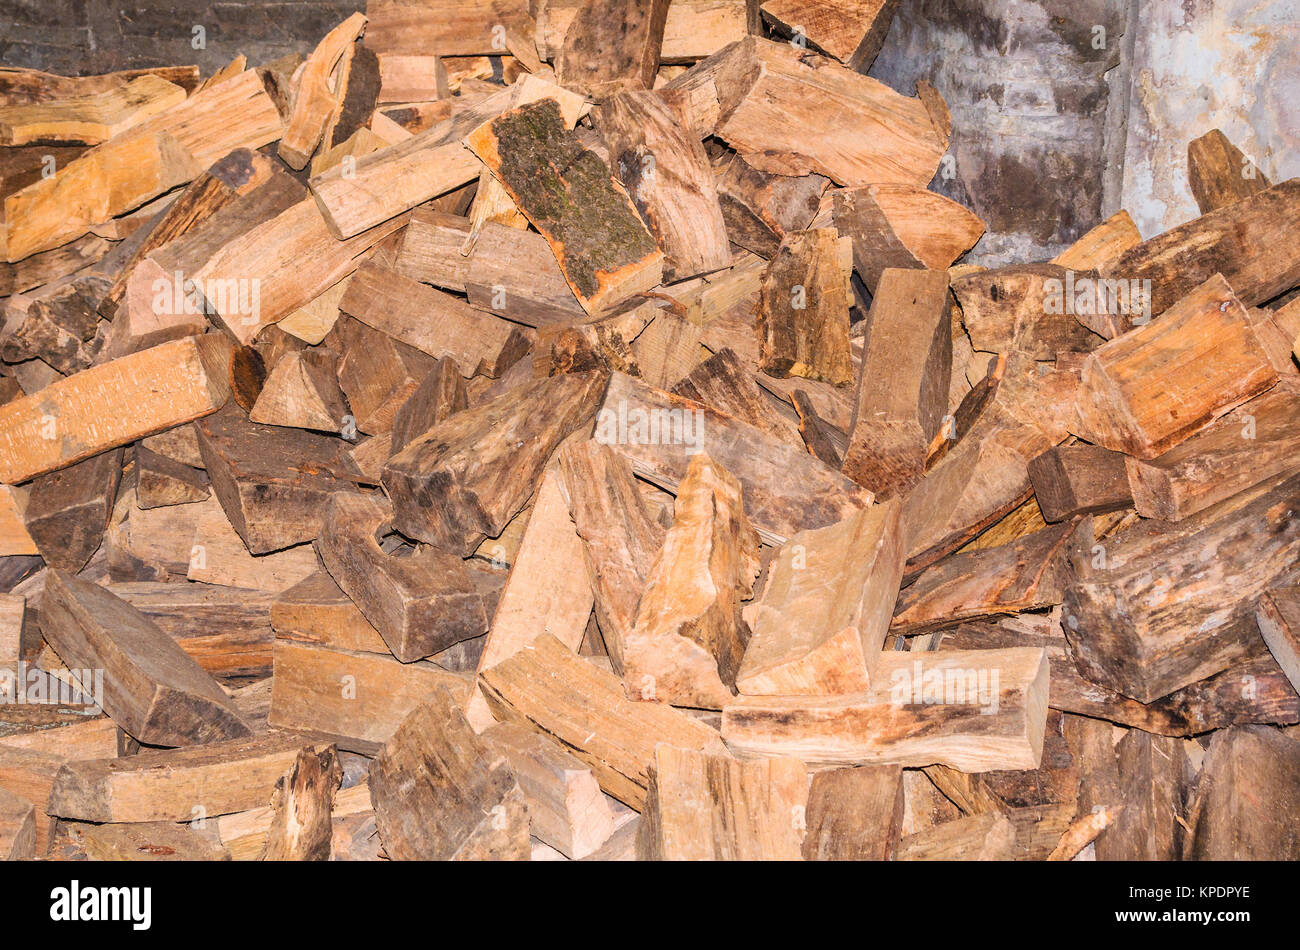 big pile of firewood Stock Photo